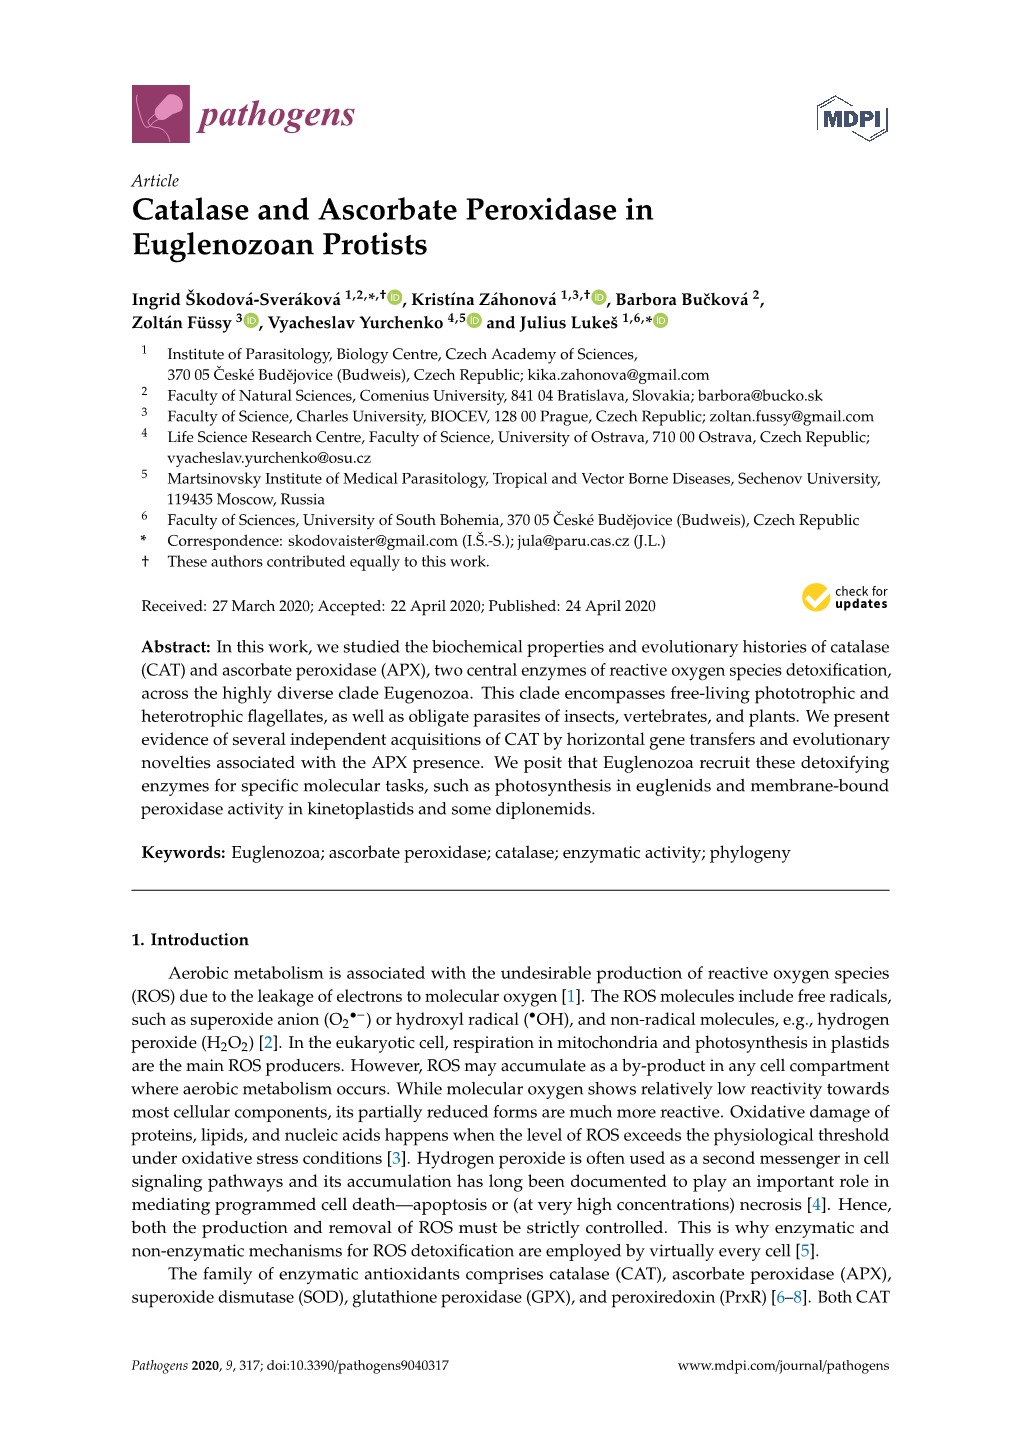 Catalase and Ascorbate Peroxidase in Euglenozoan Protists